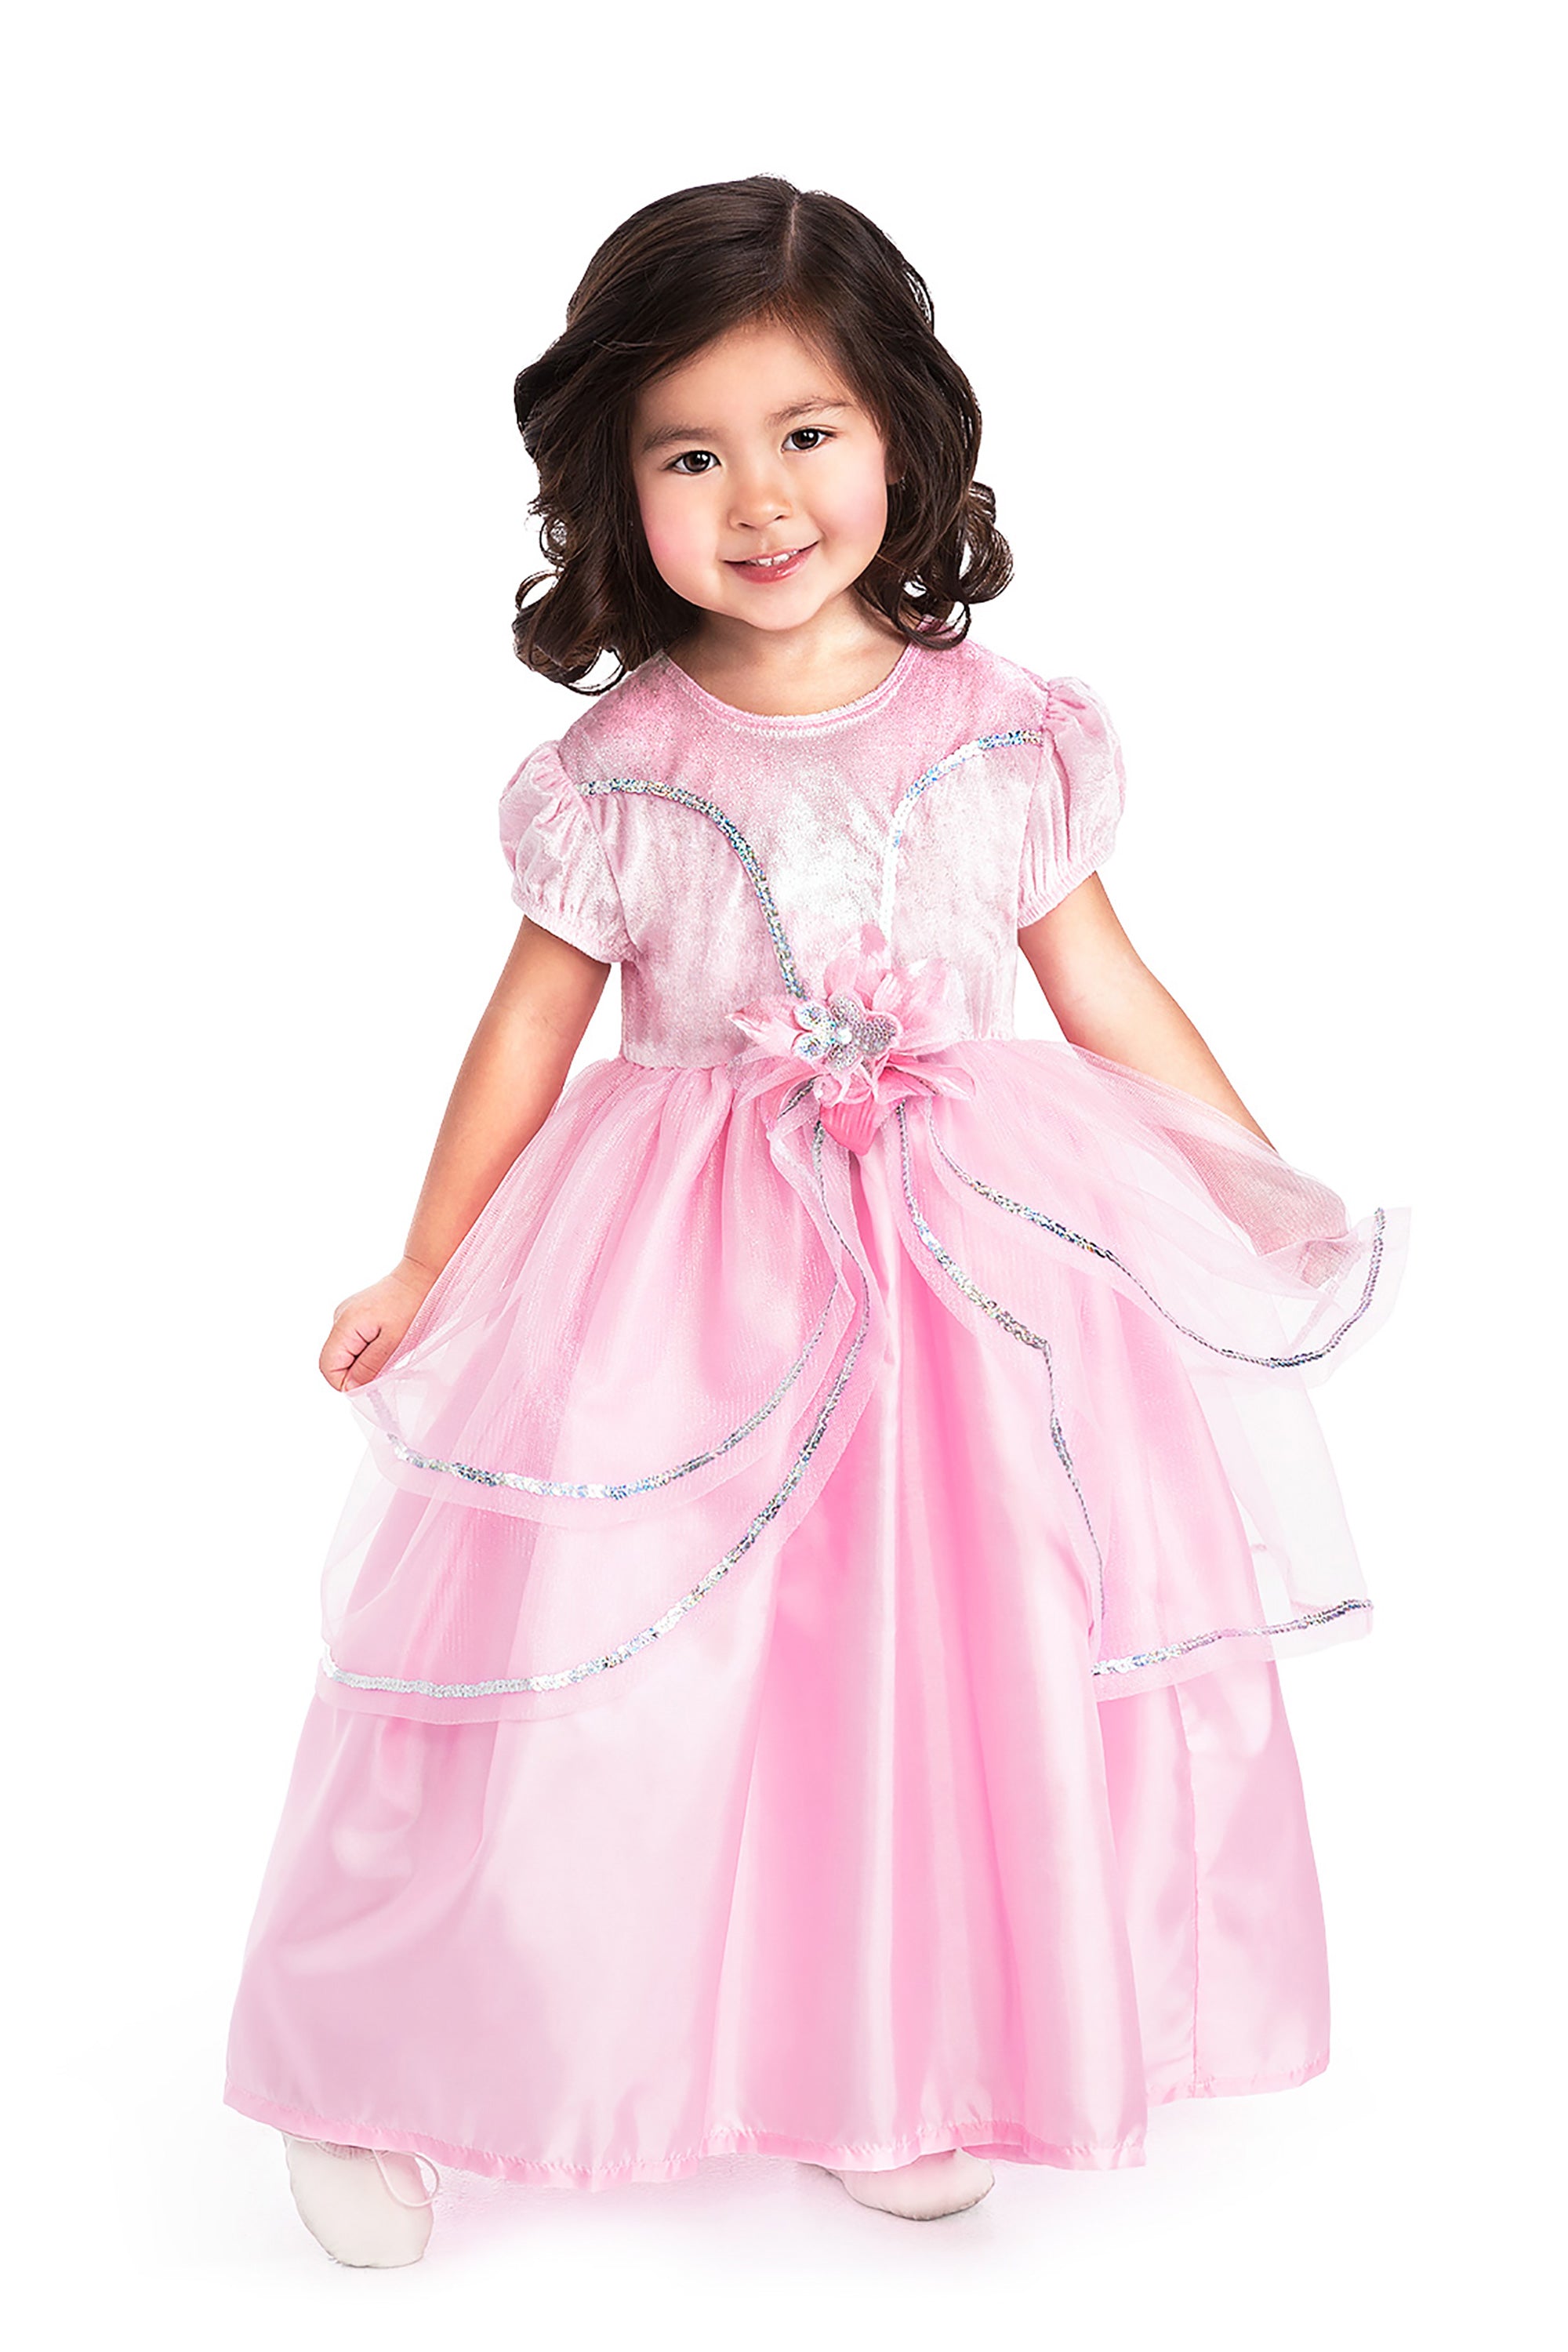 dresses for girls pink